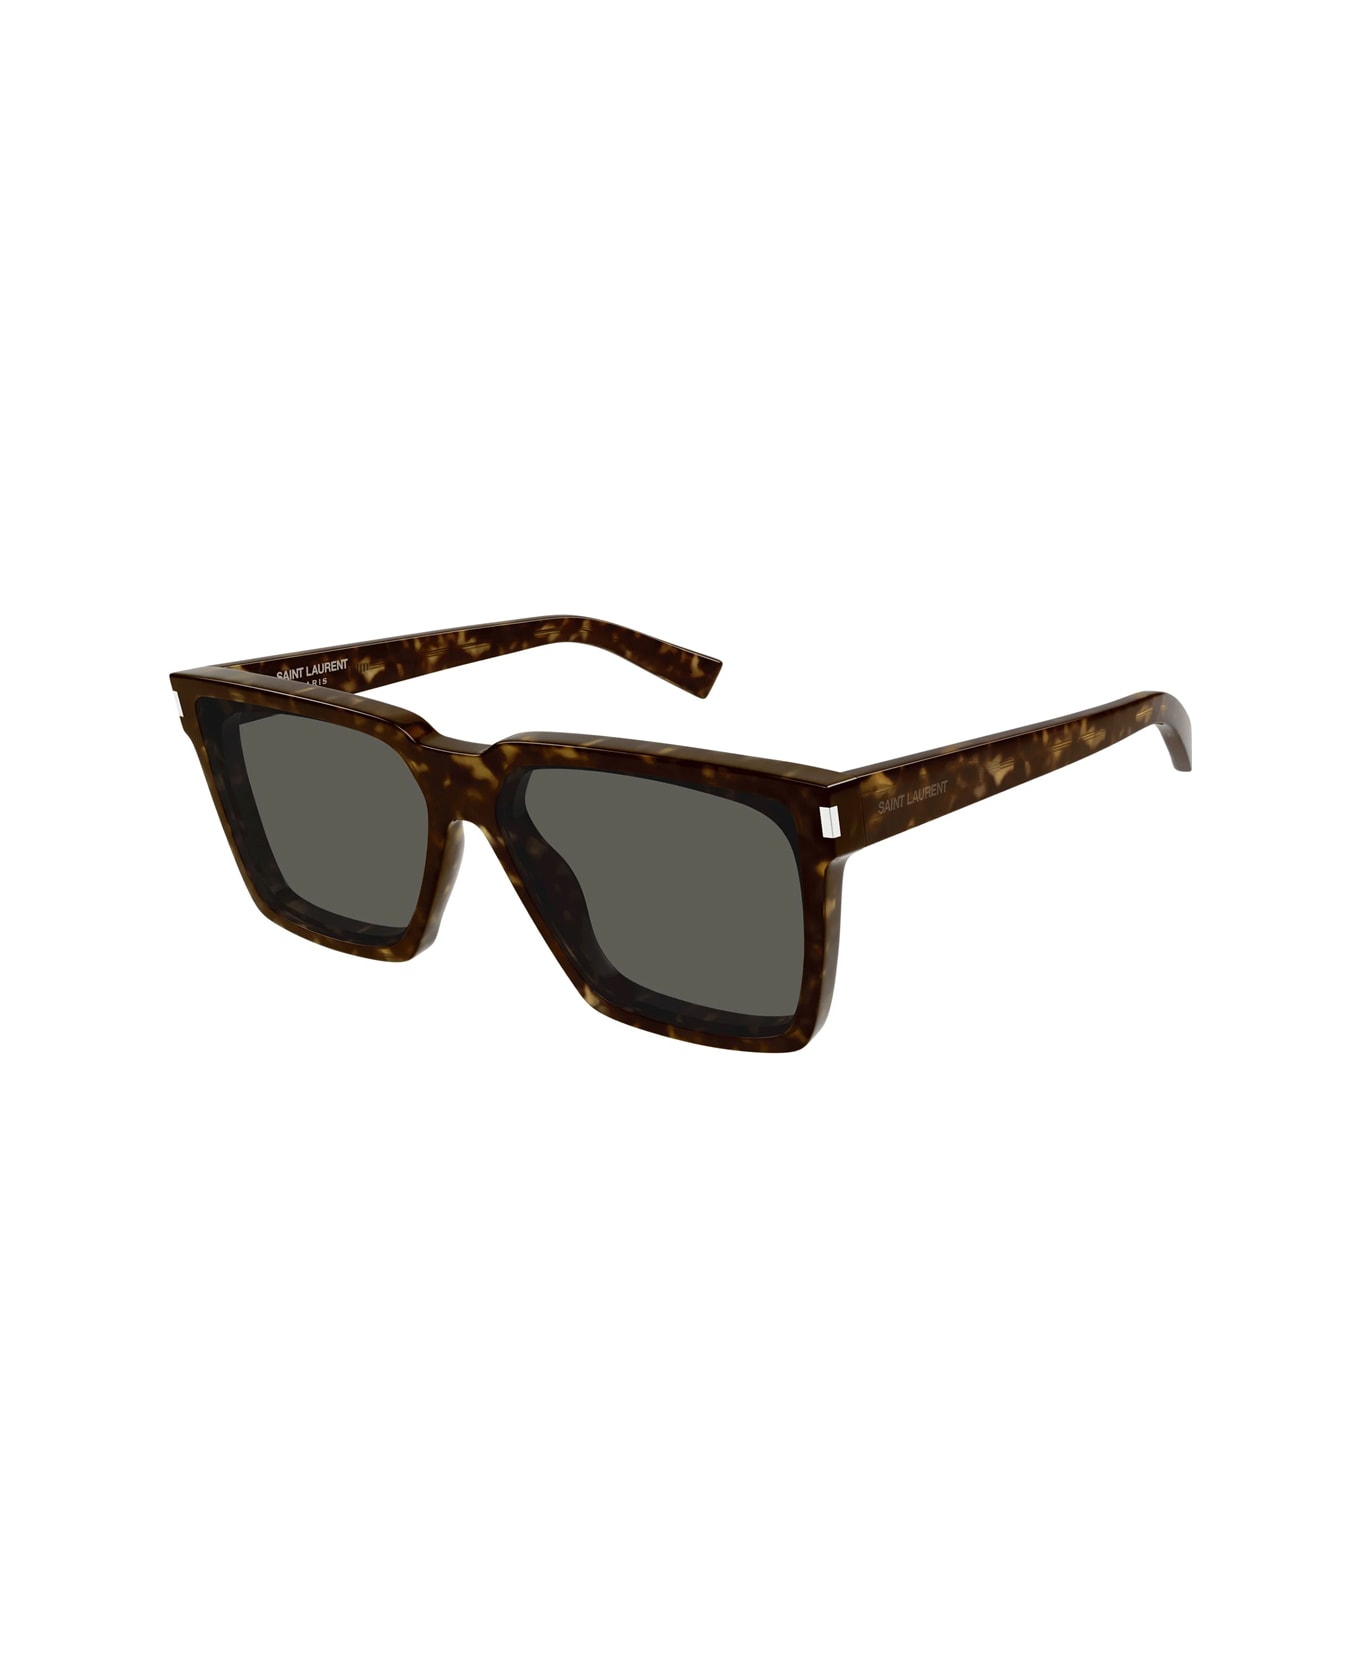 Saint Laurent Eyewear Sl 610 002 Sunglasses - Marrone